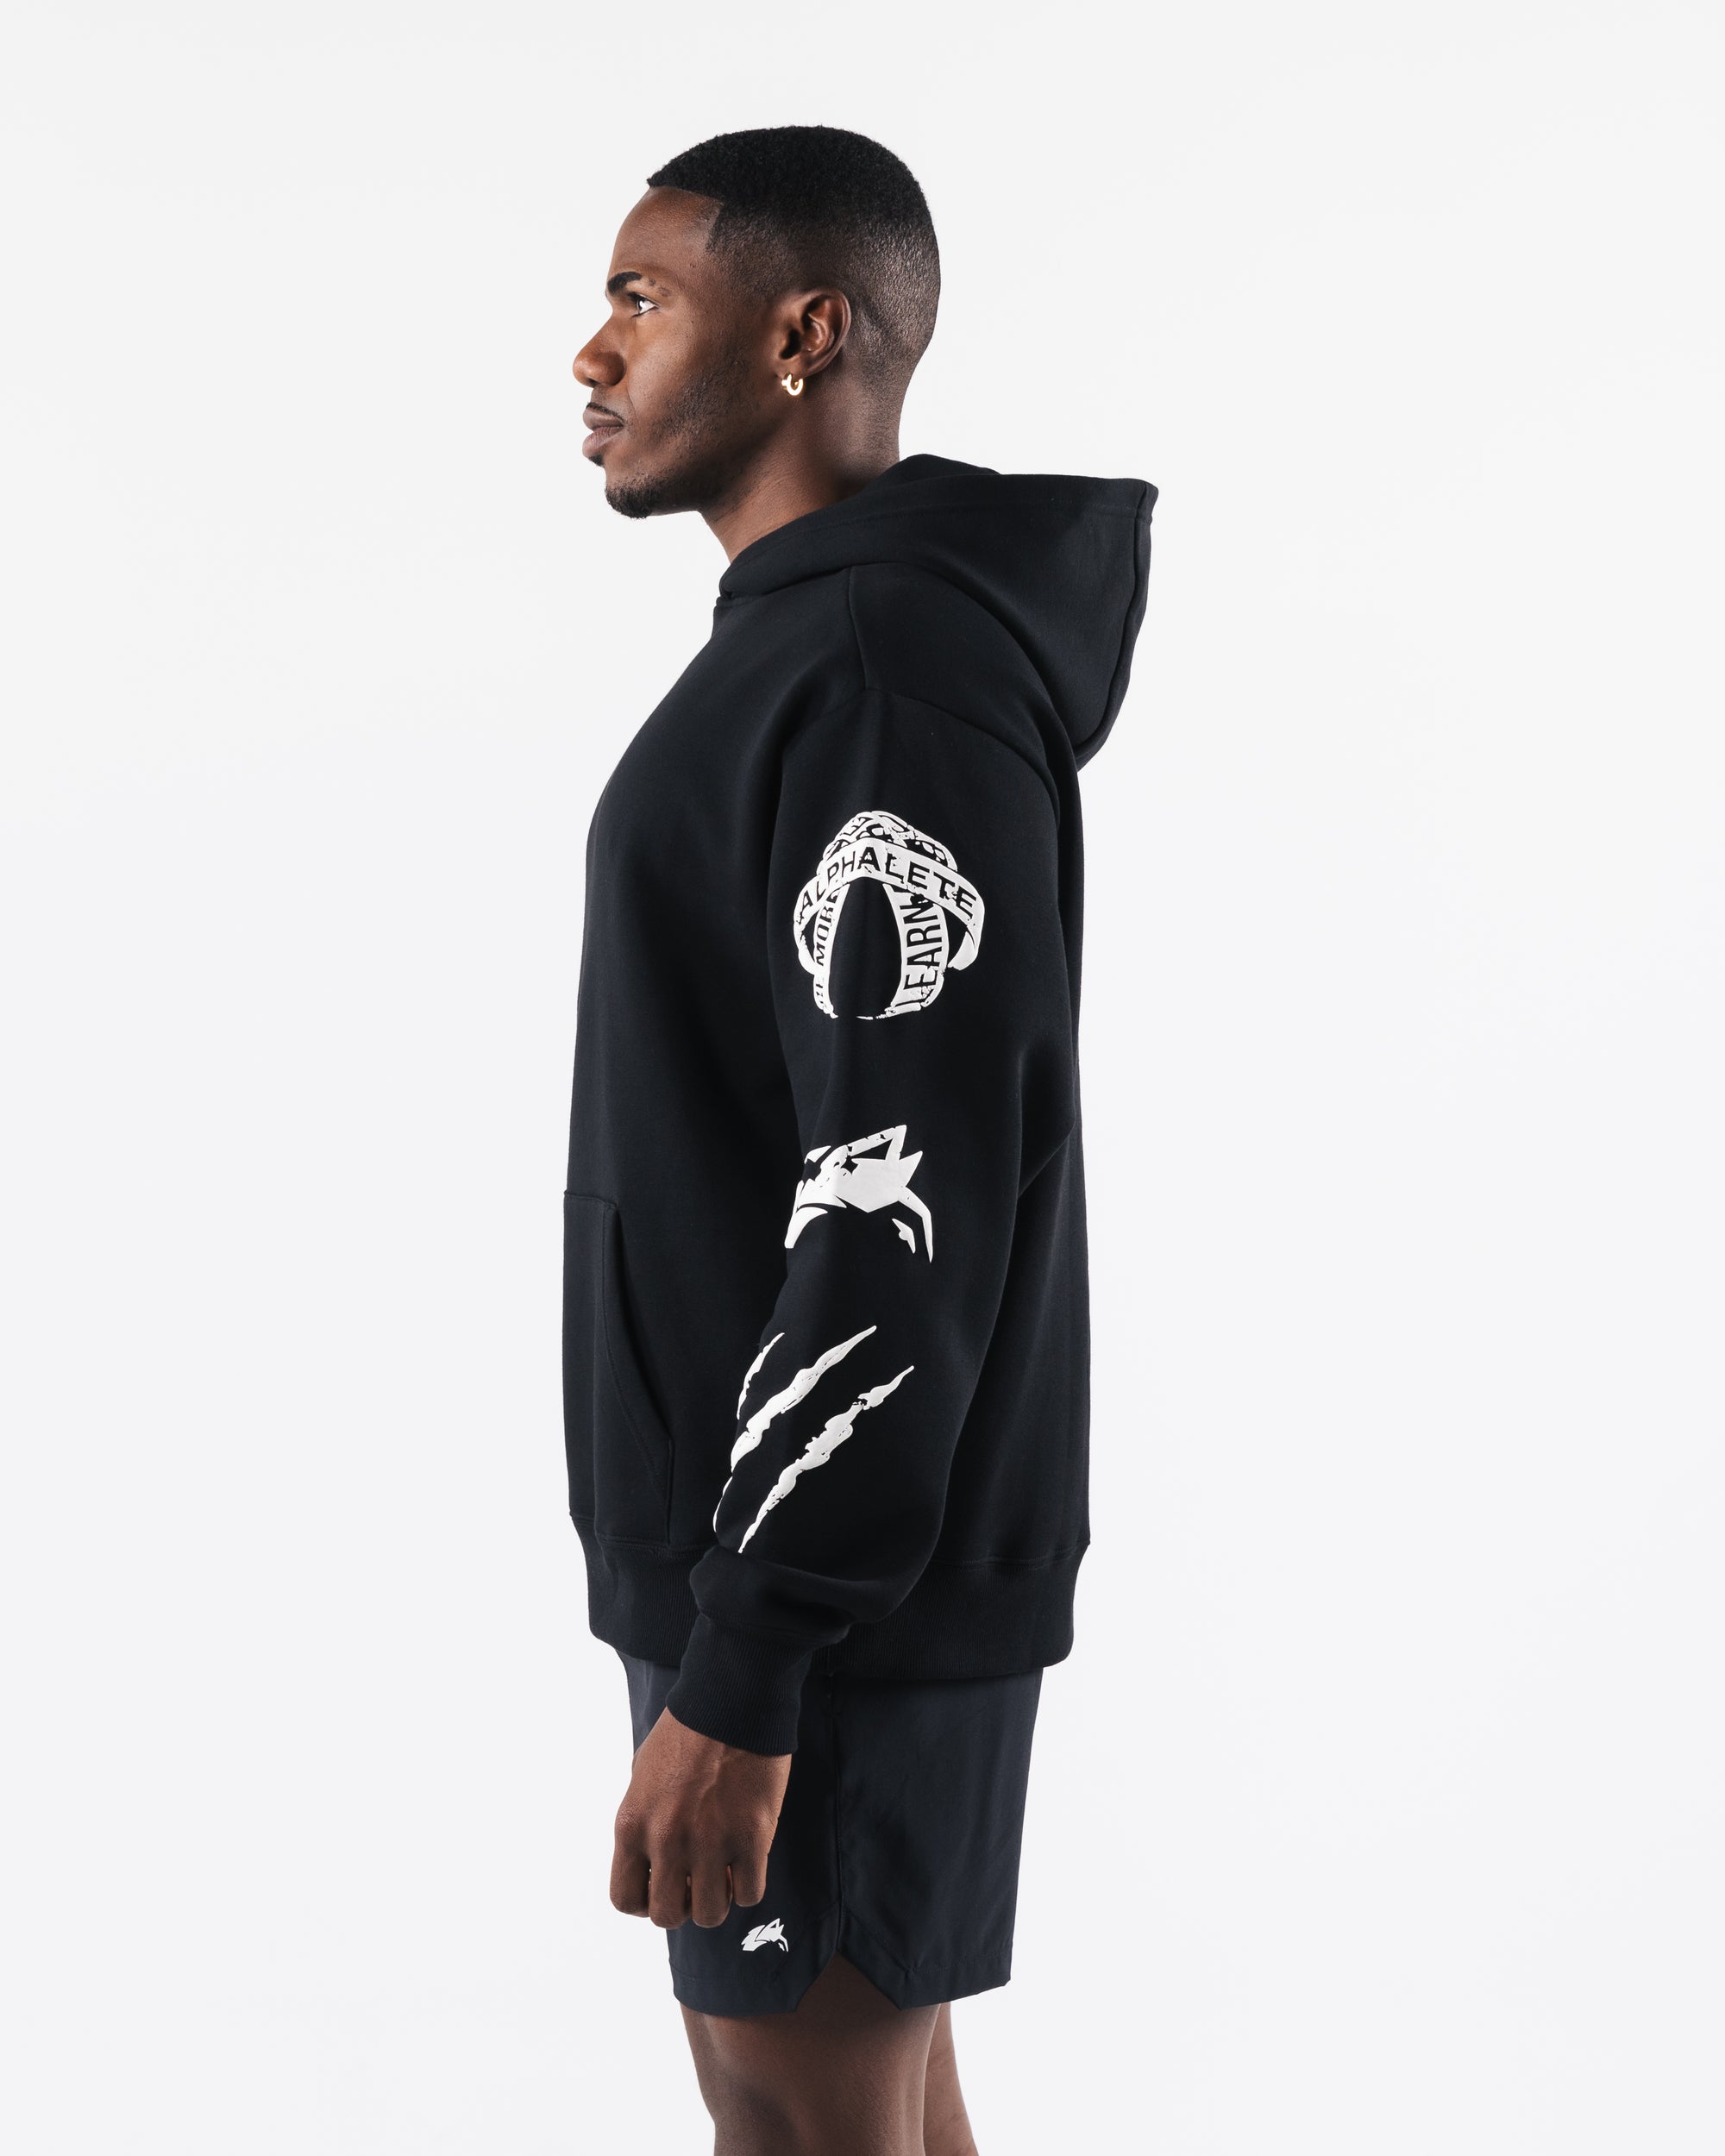 Branded, Stylish and Premium Quality alphalete gym hoodies